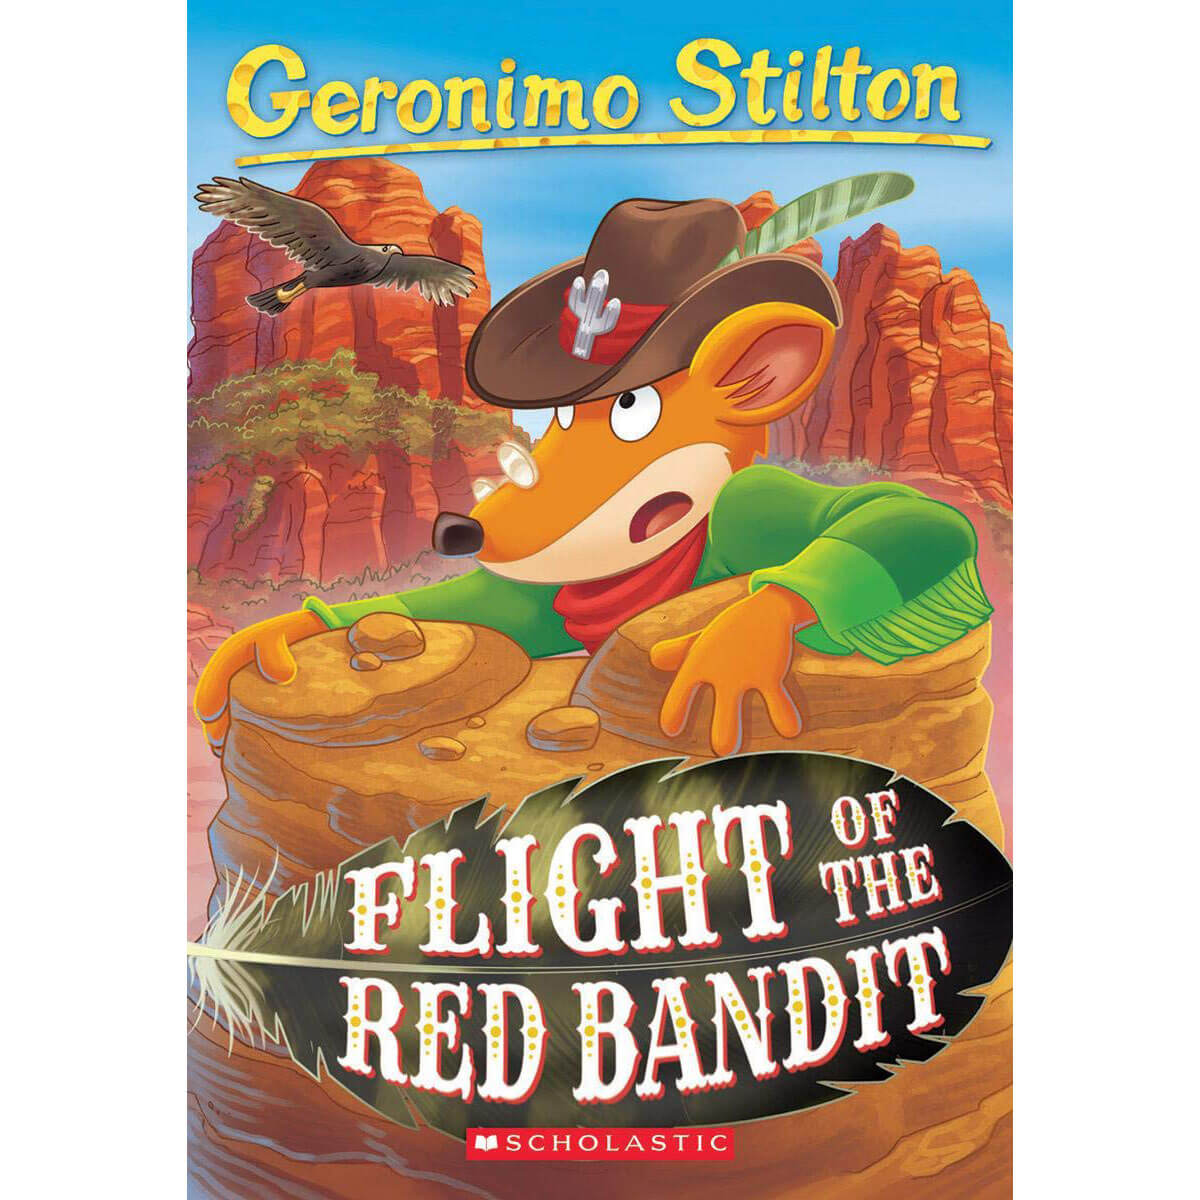 Flight of the Red Bandit (Geronimo Stilton #56)